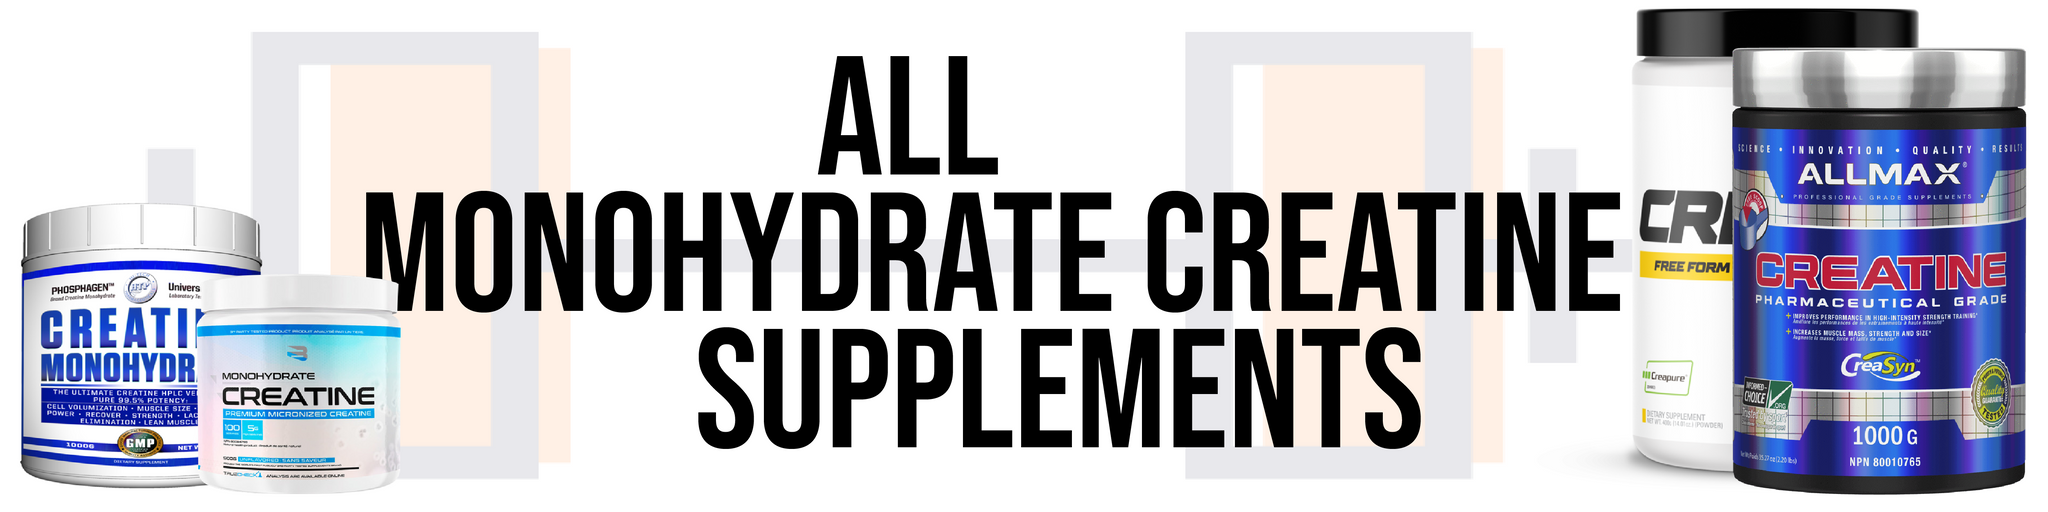 Monohydrate Creatine Supplements